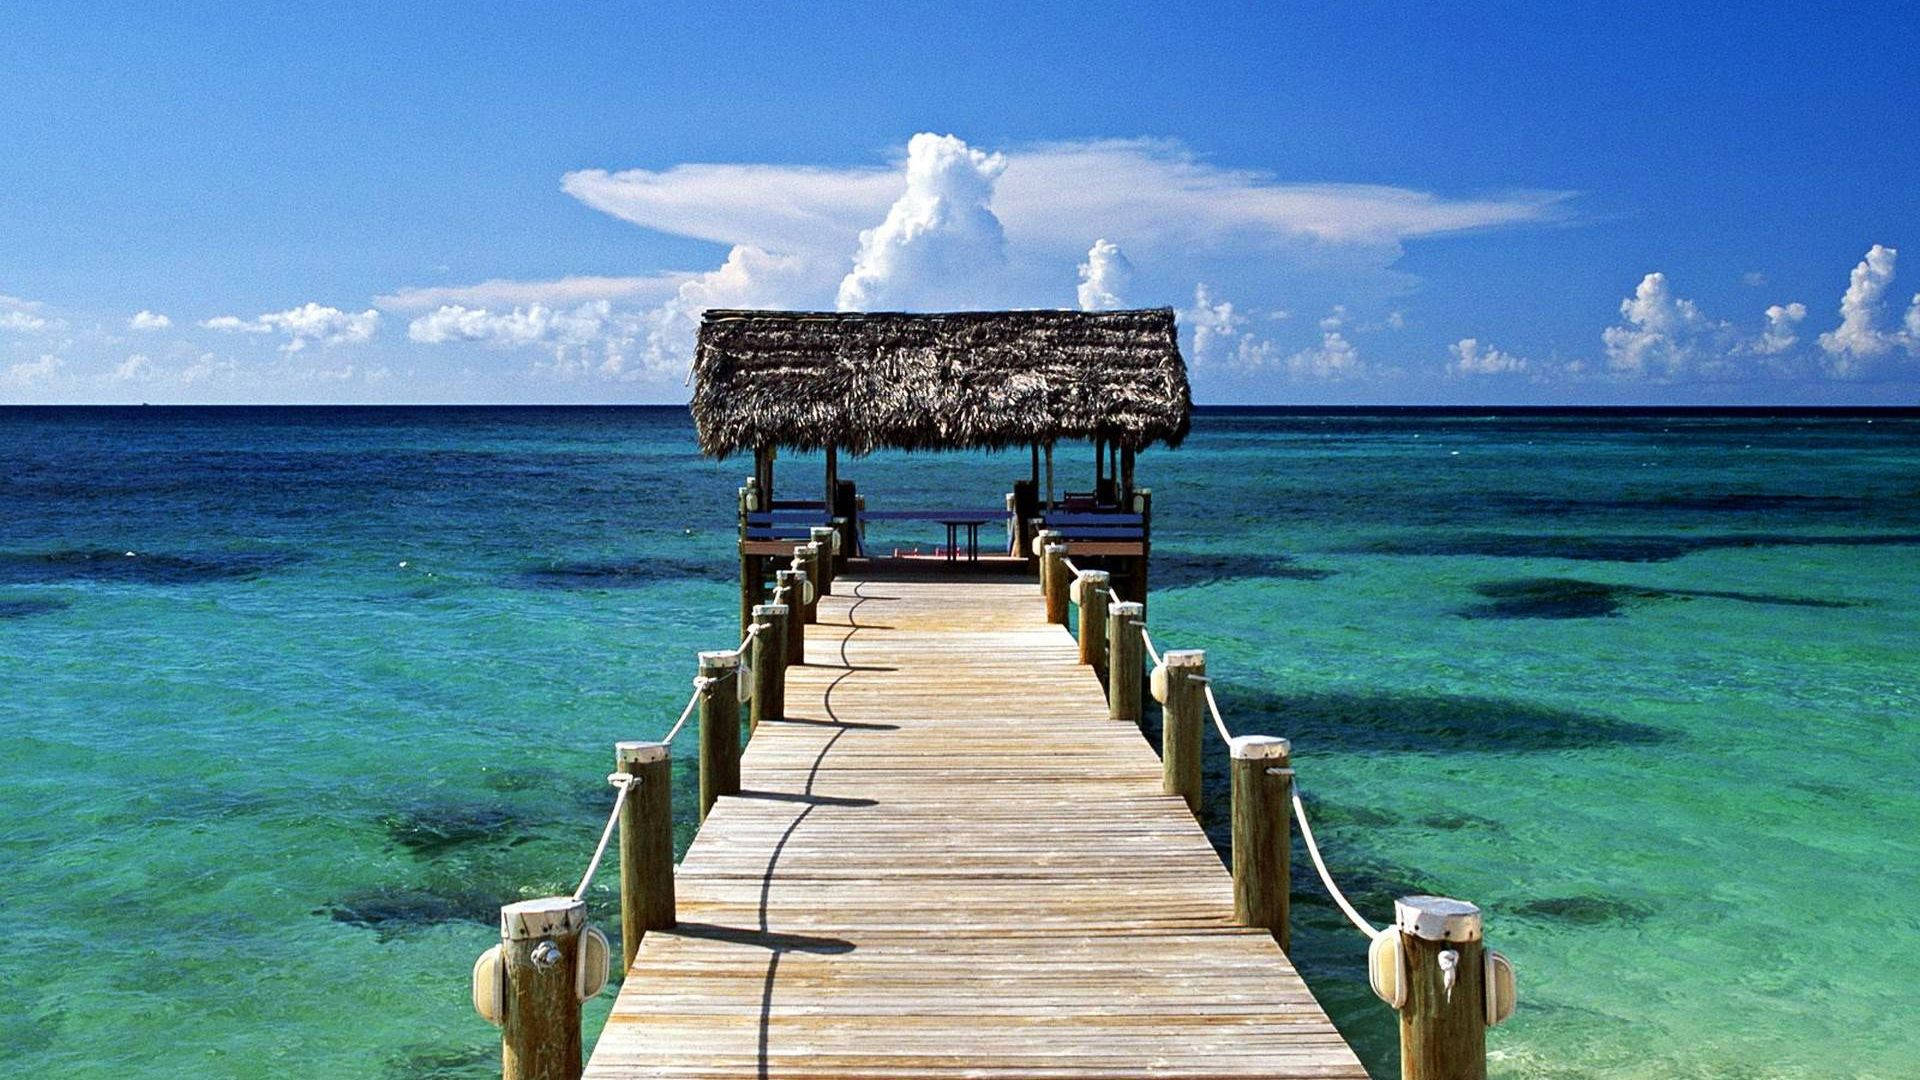 Bahamas Bridge In The Ocean Background